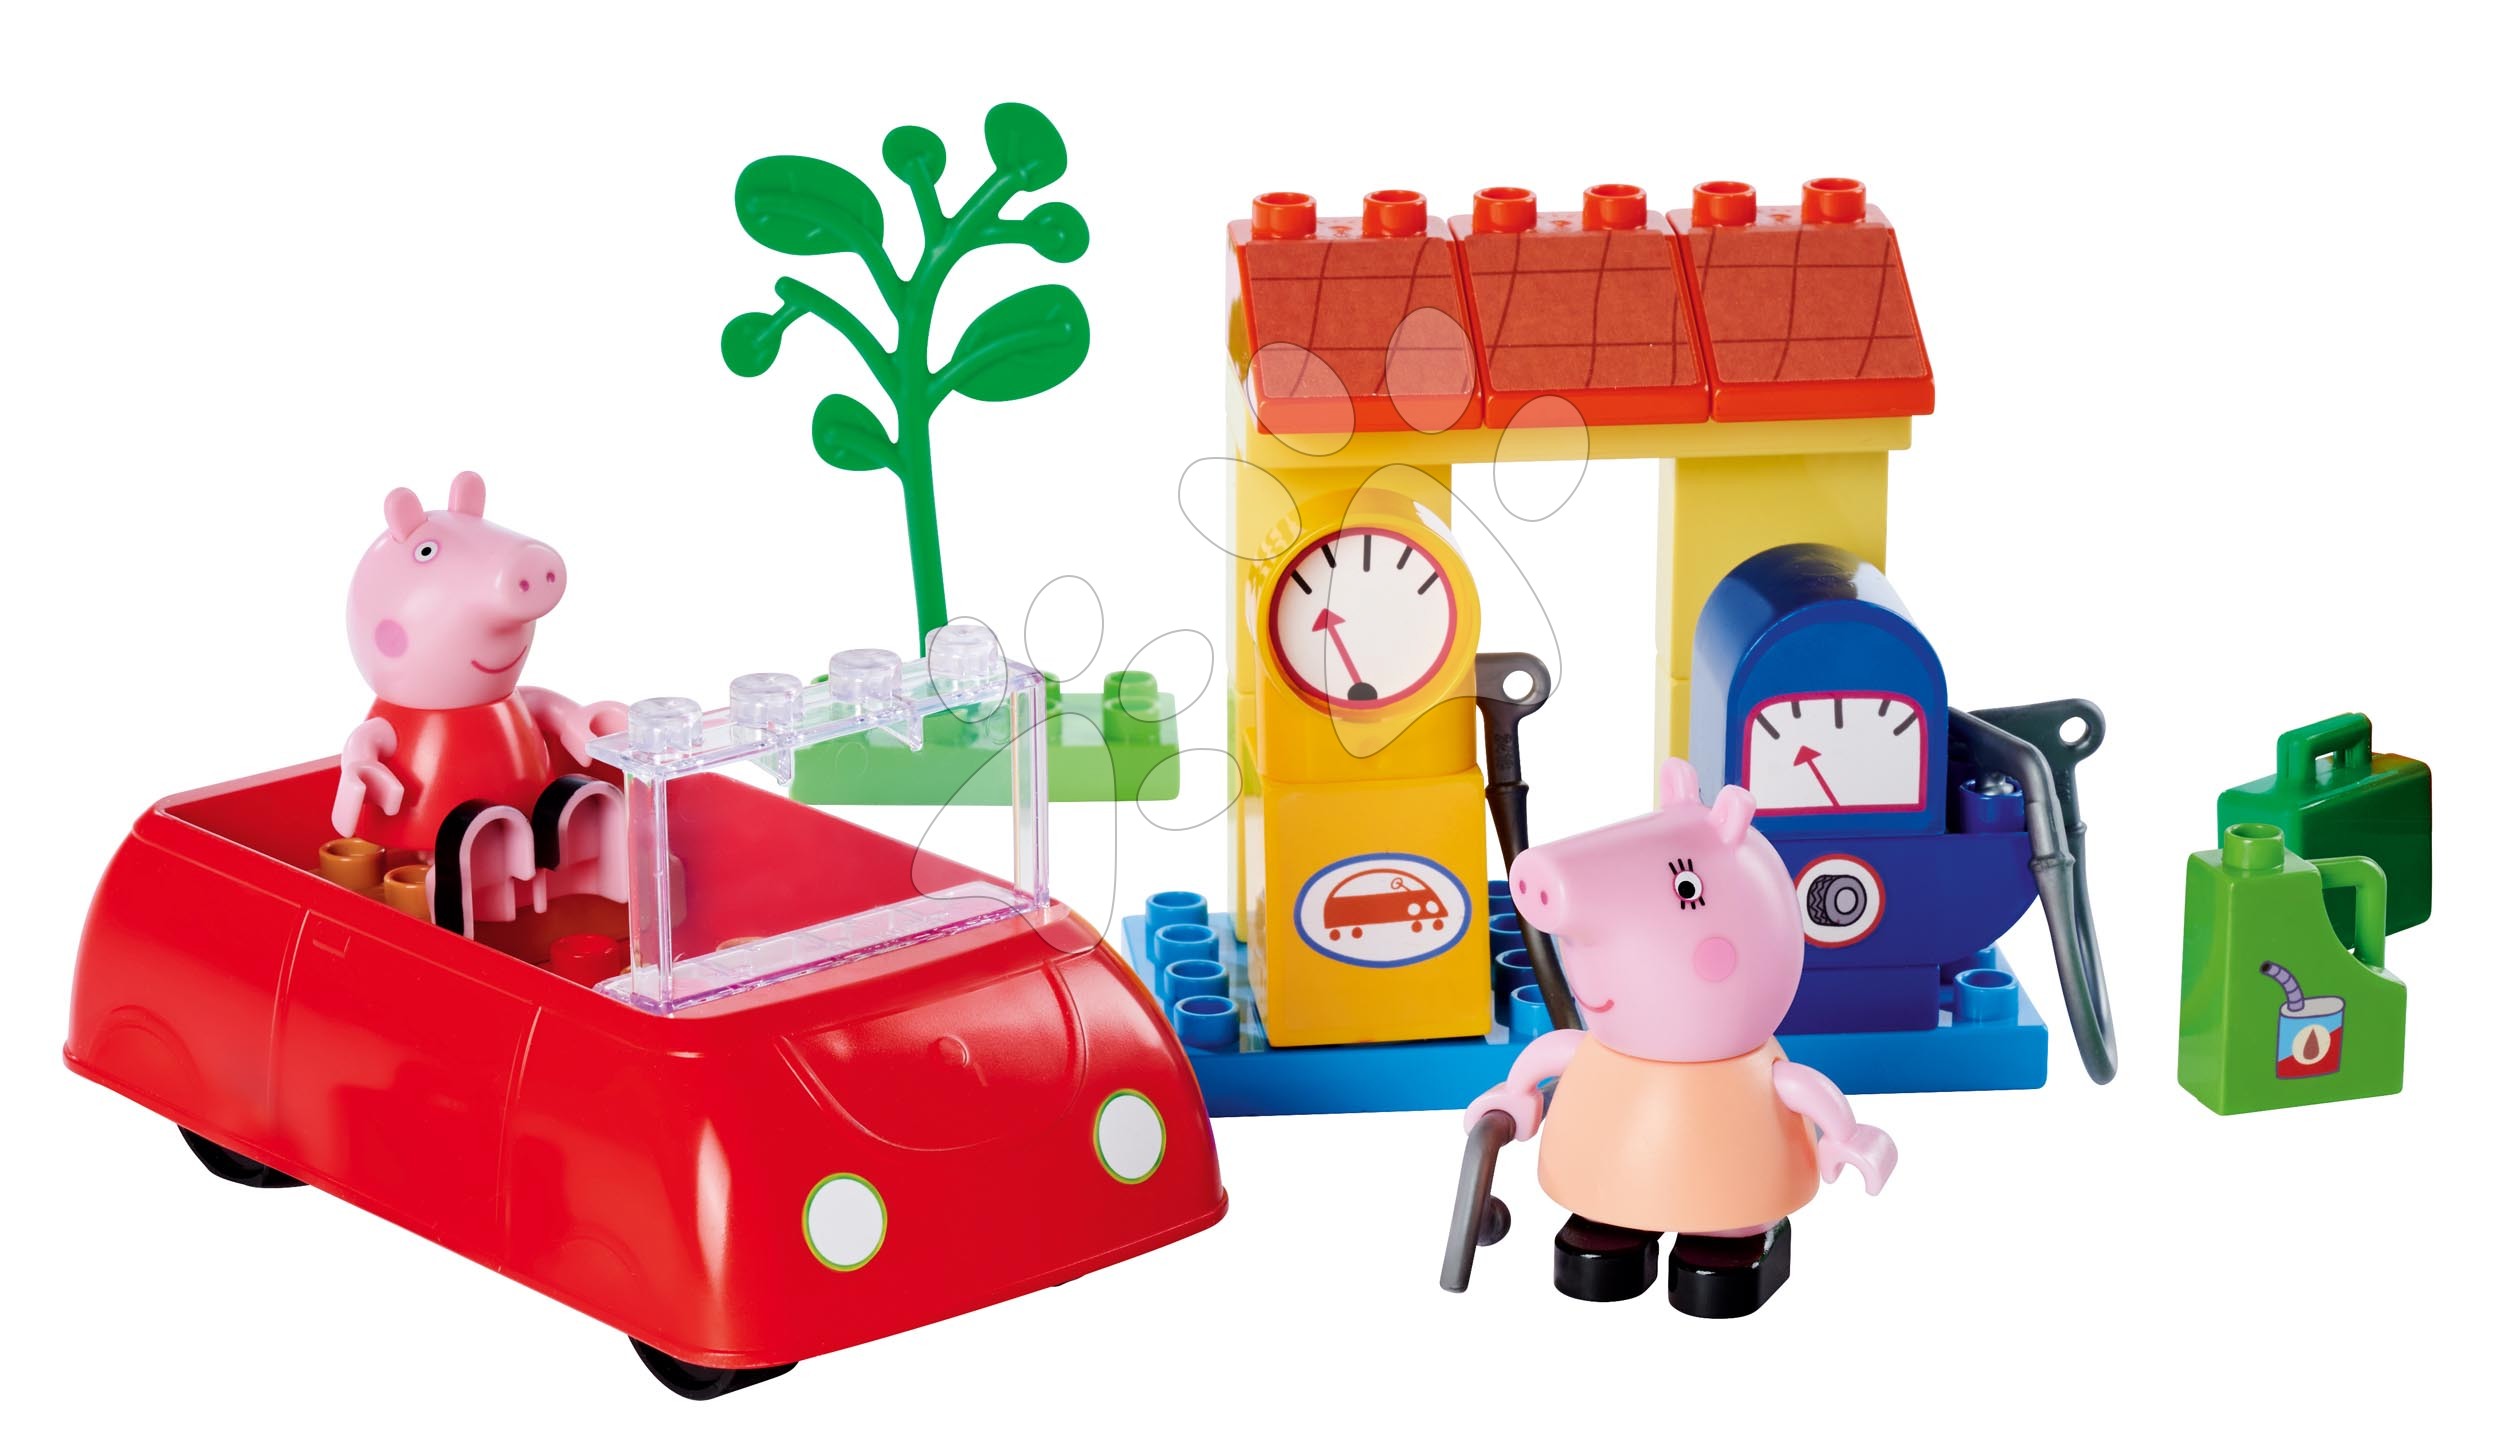 Stavebnice BIG-Bloxx jako lego - Stavebnice Peppa Pig Family Car PlayBig Bloxx BIG s 2 figurkami v autíčku na pumpě 28 dílů od od 1,5-5 let